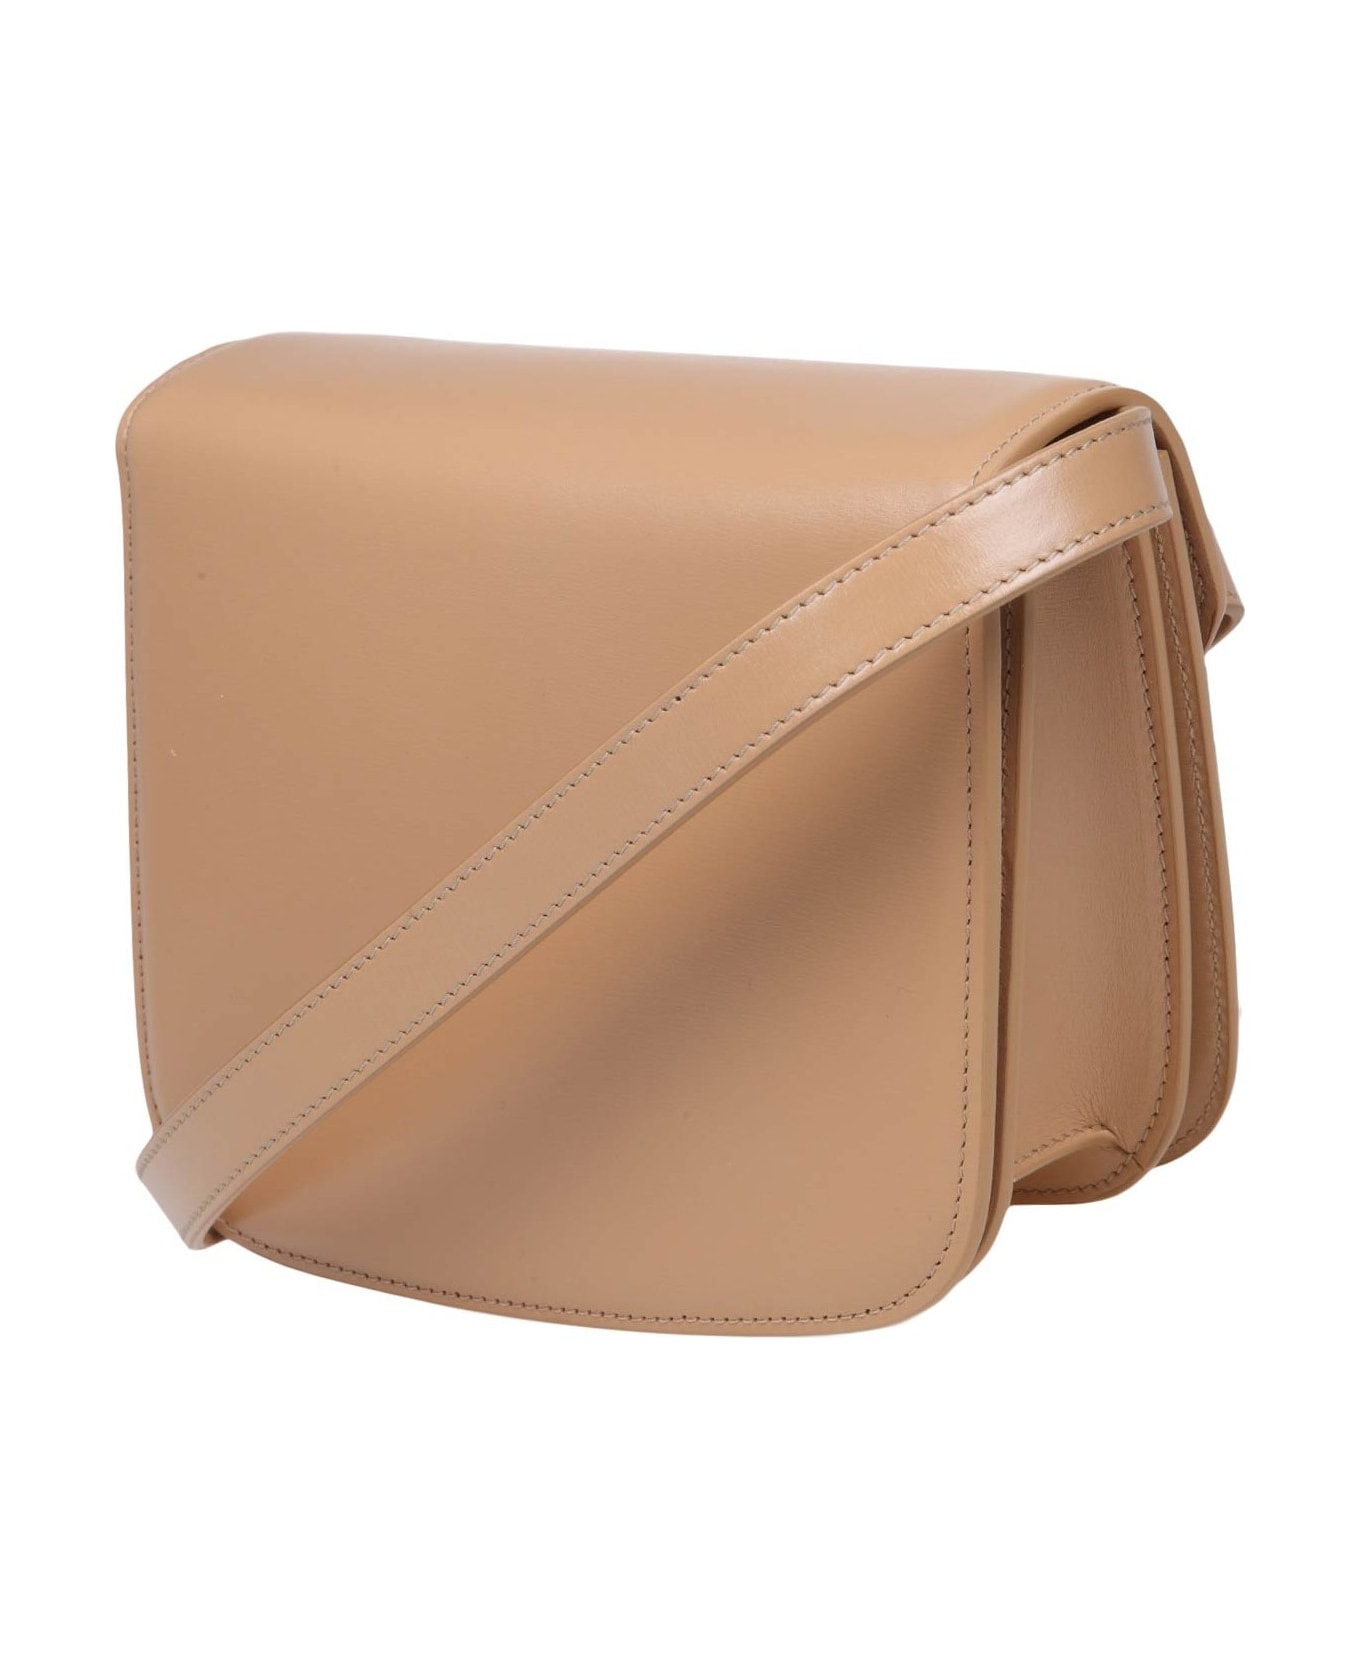 Ferragamo Small Fiamma Shoulder Bag In Camel Color Leather - Camel